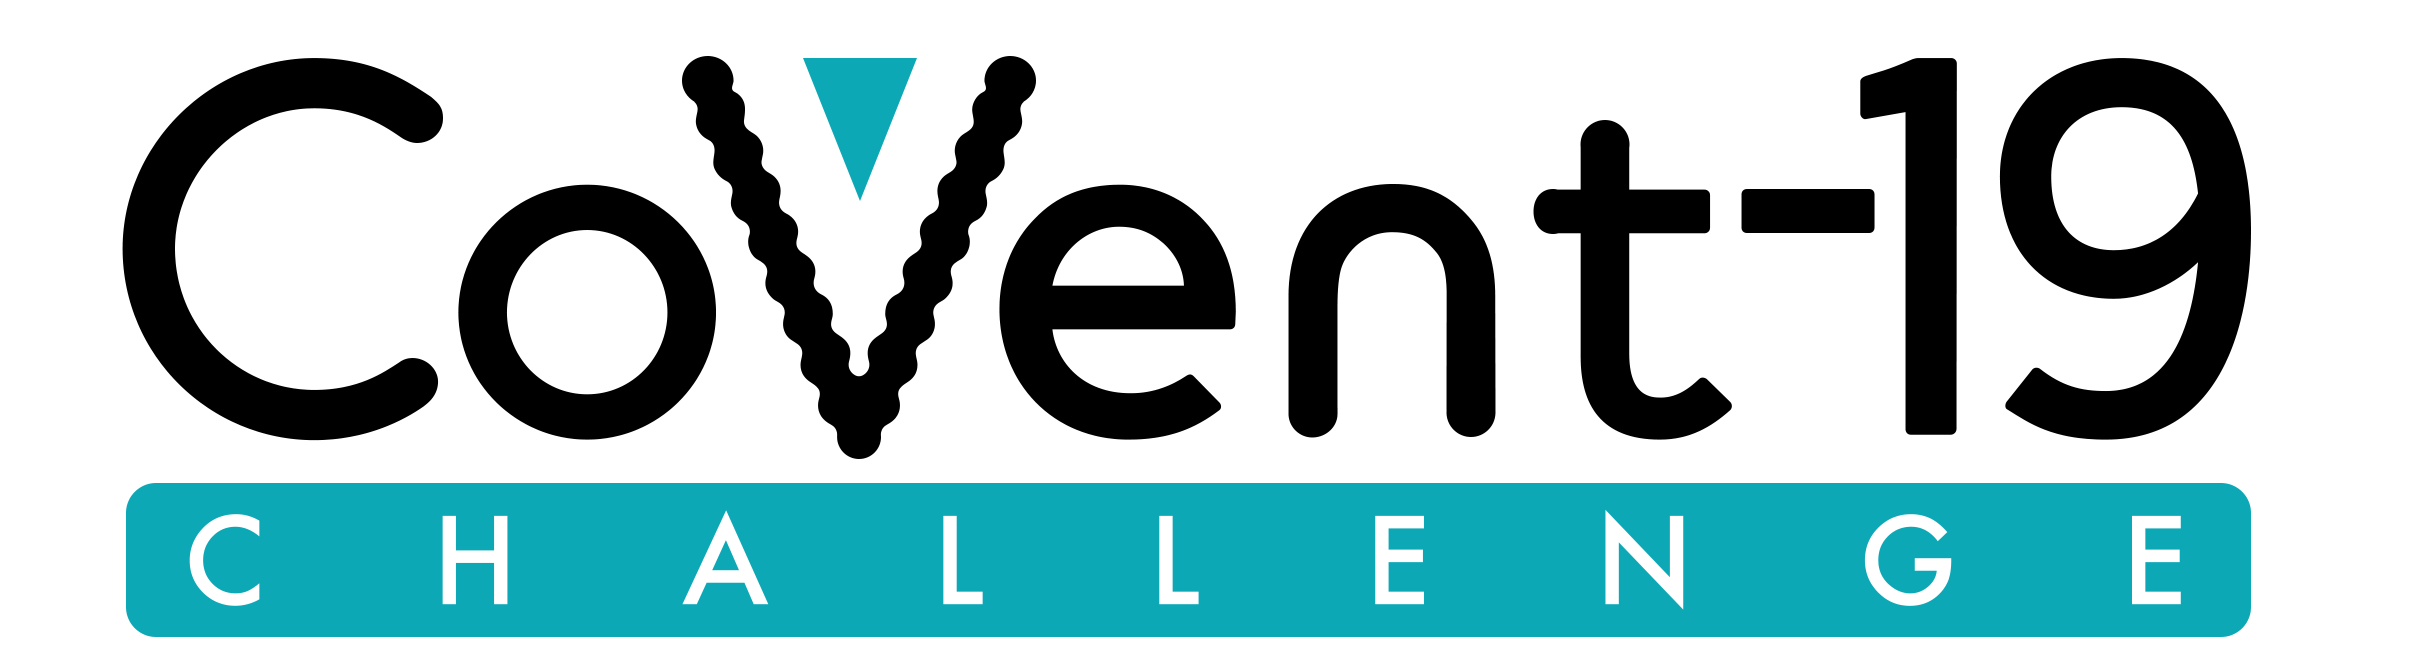 CoVent-19 Challenge logo